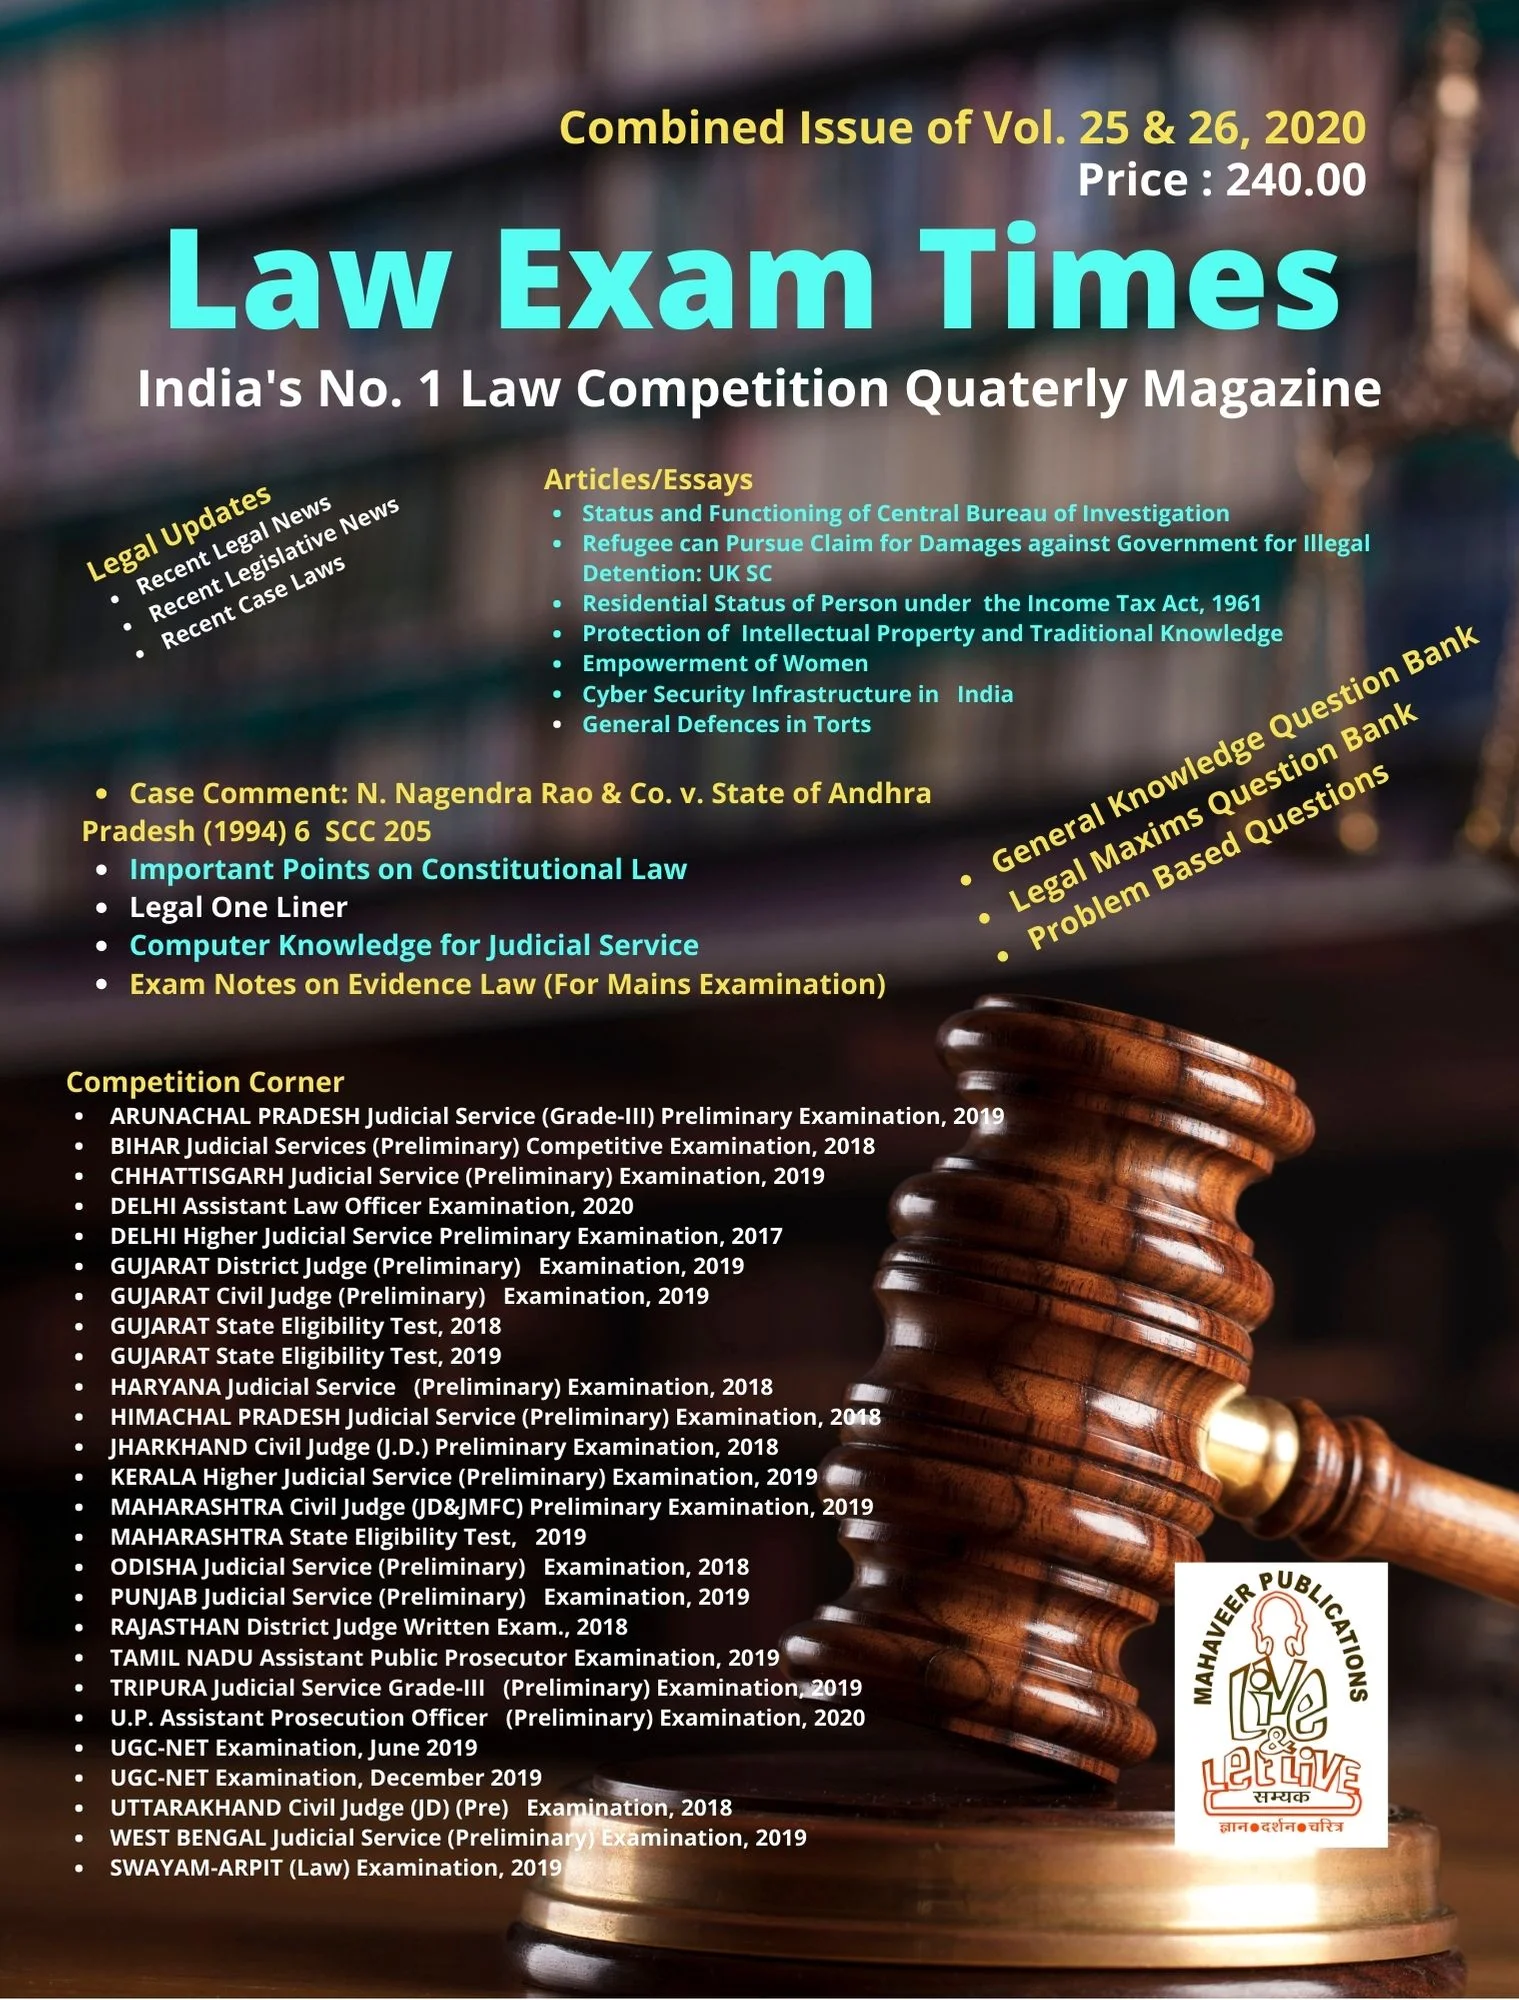 Law-Exam-Times-final.jpg